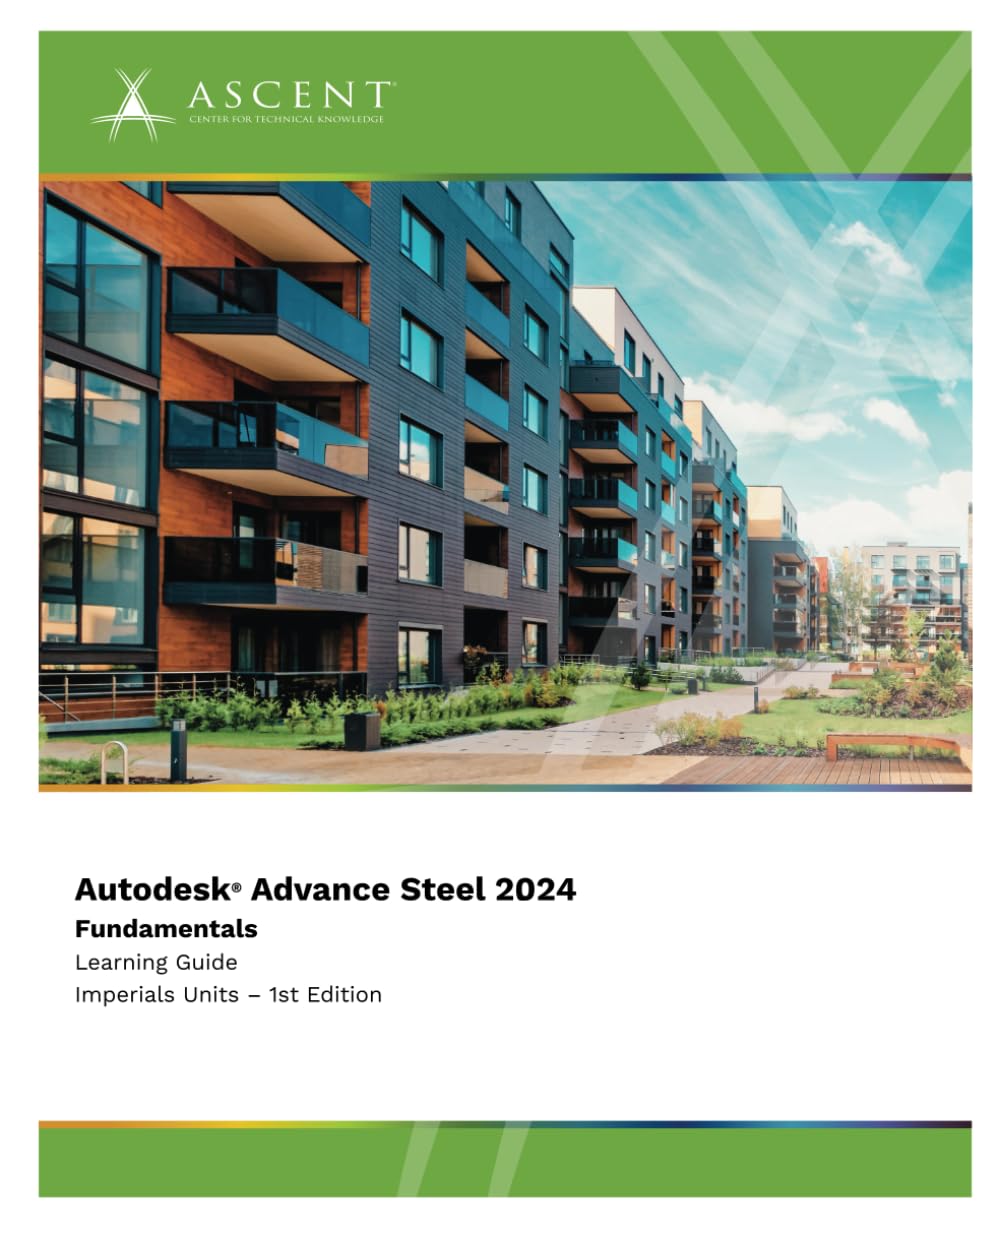 Autodesk Advance Steel 2024: Fundamentals (Imperial Units)